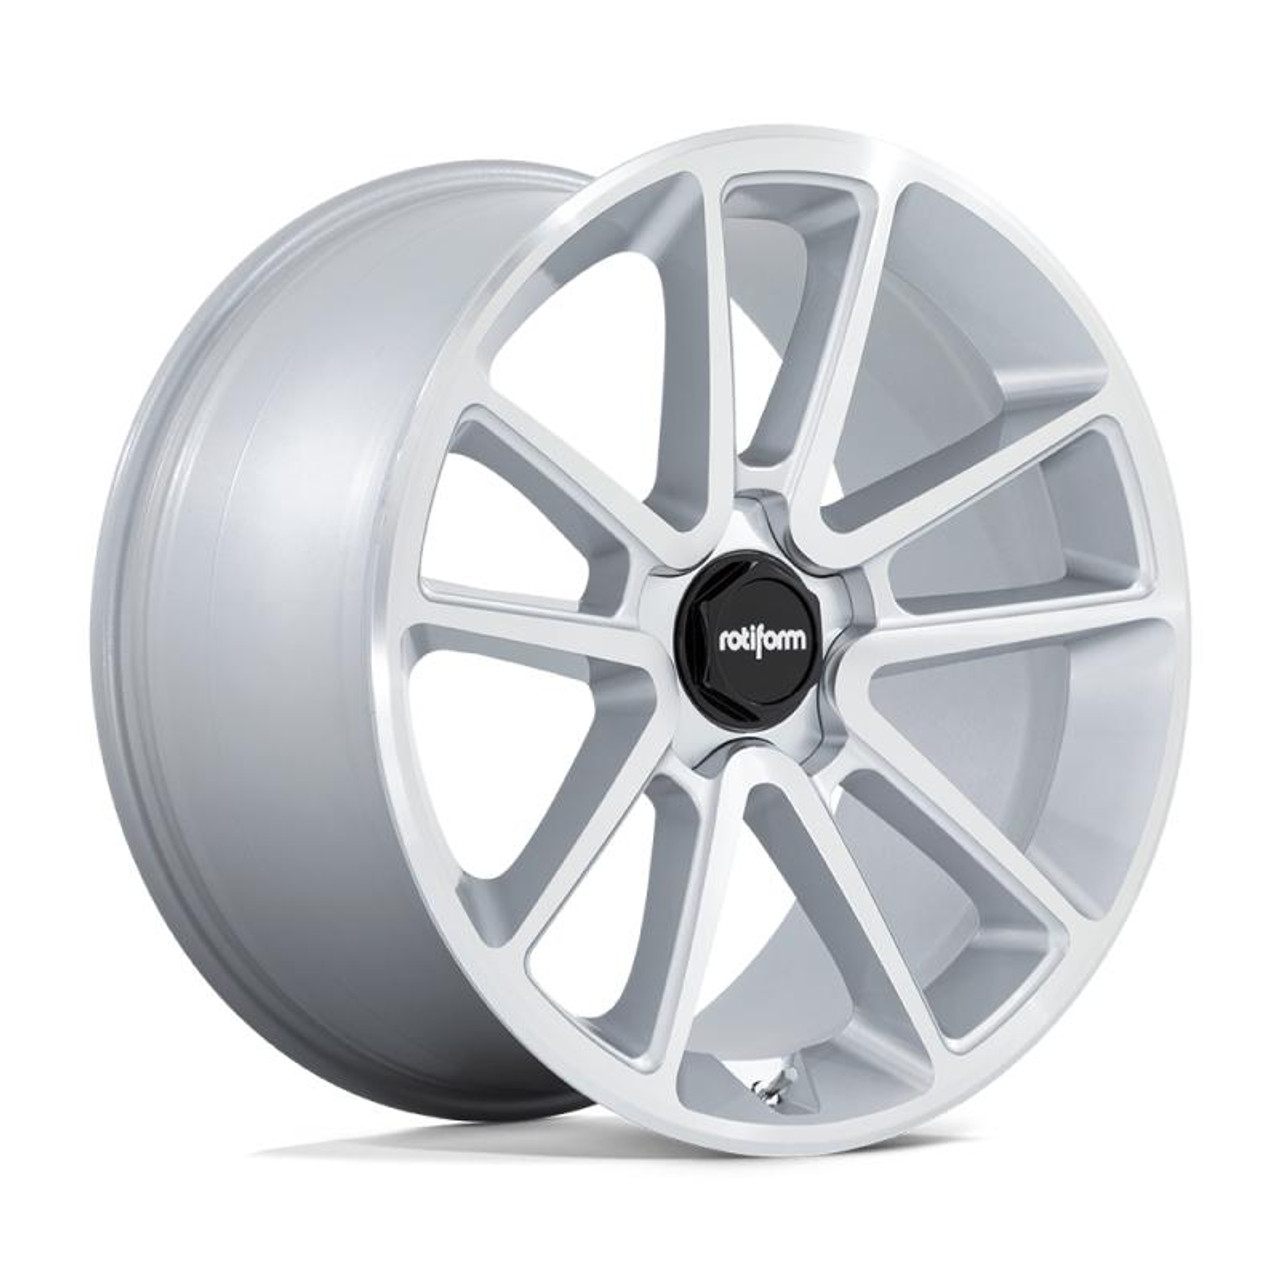  Rotiform R192 BTL Wheel 21x9.5 5x130 55 Offset - Gloss Silver w/ Machined Face - R192219563+55 